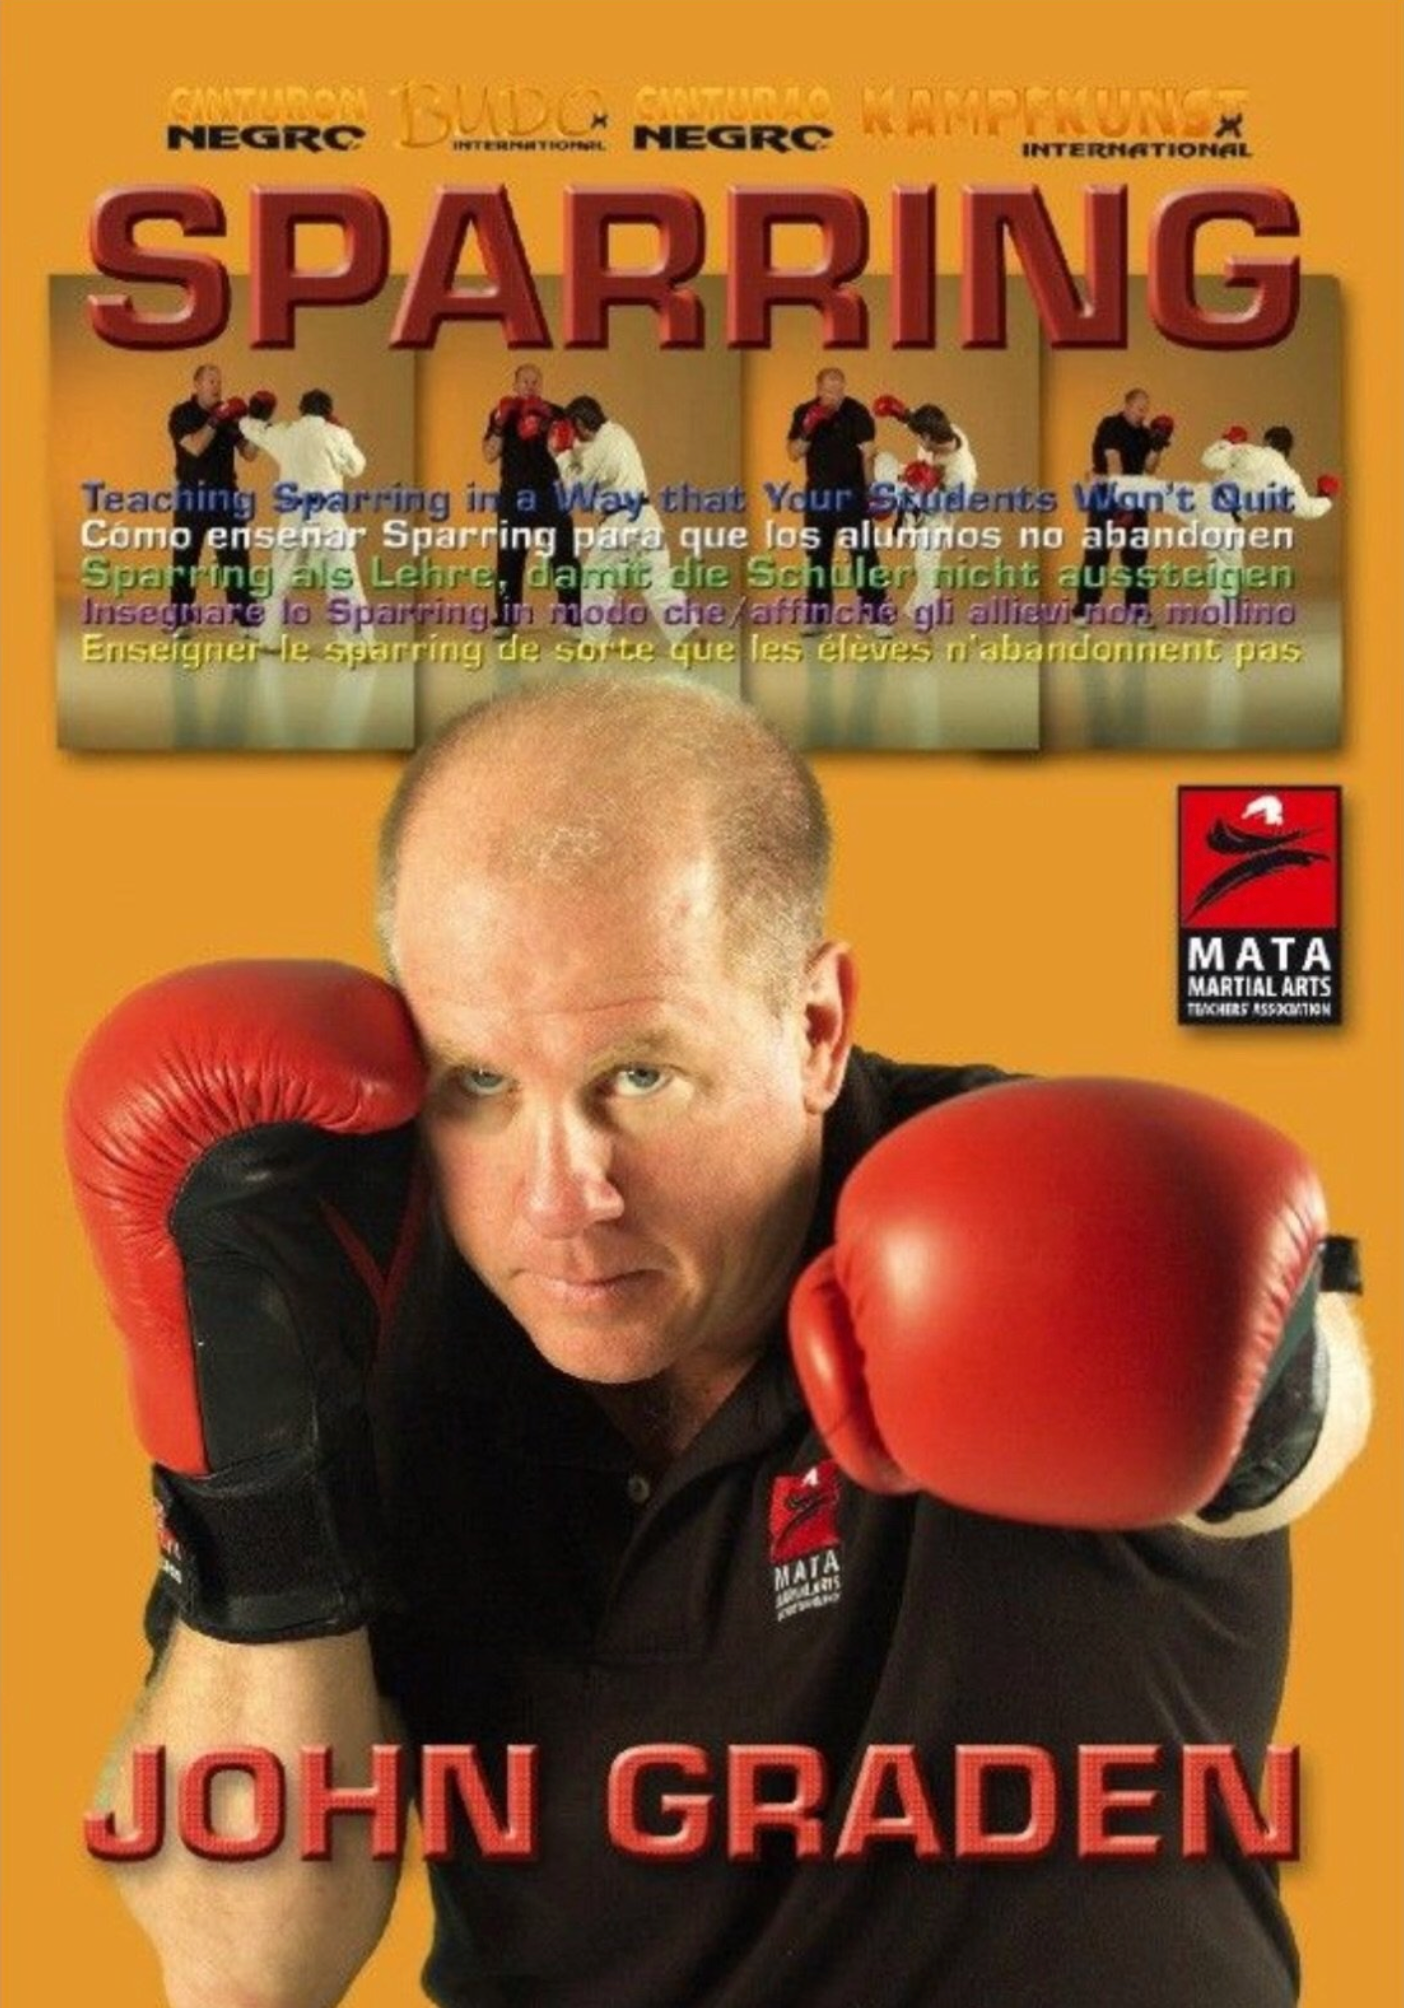 Sparring DVD with John Graden - Budovideos Inc